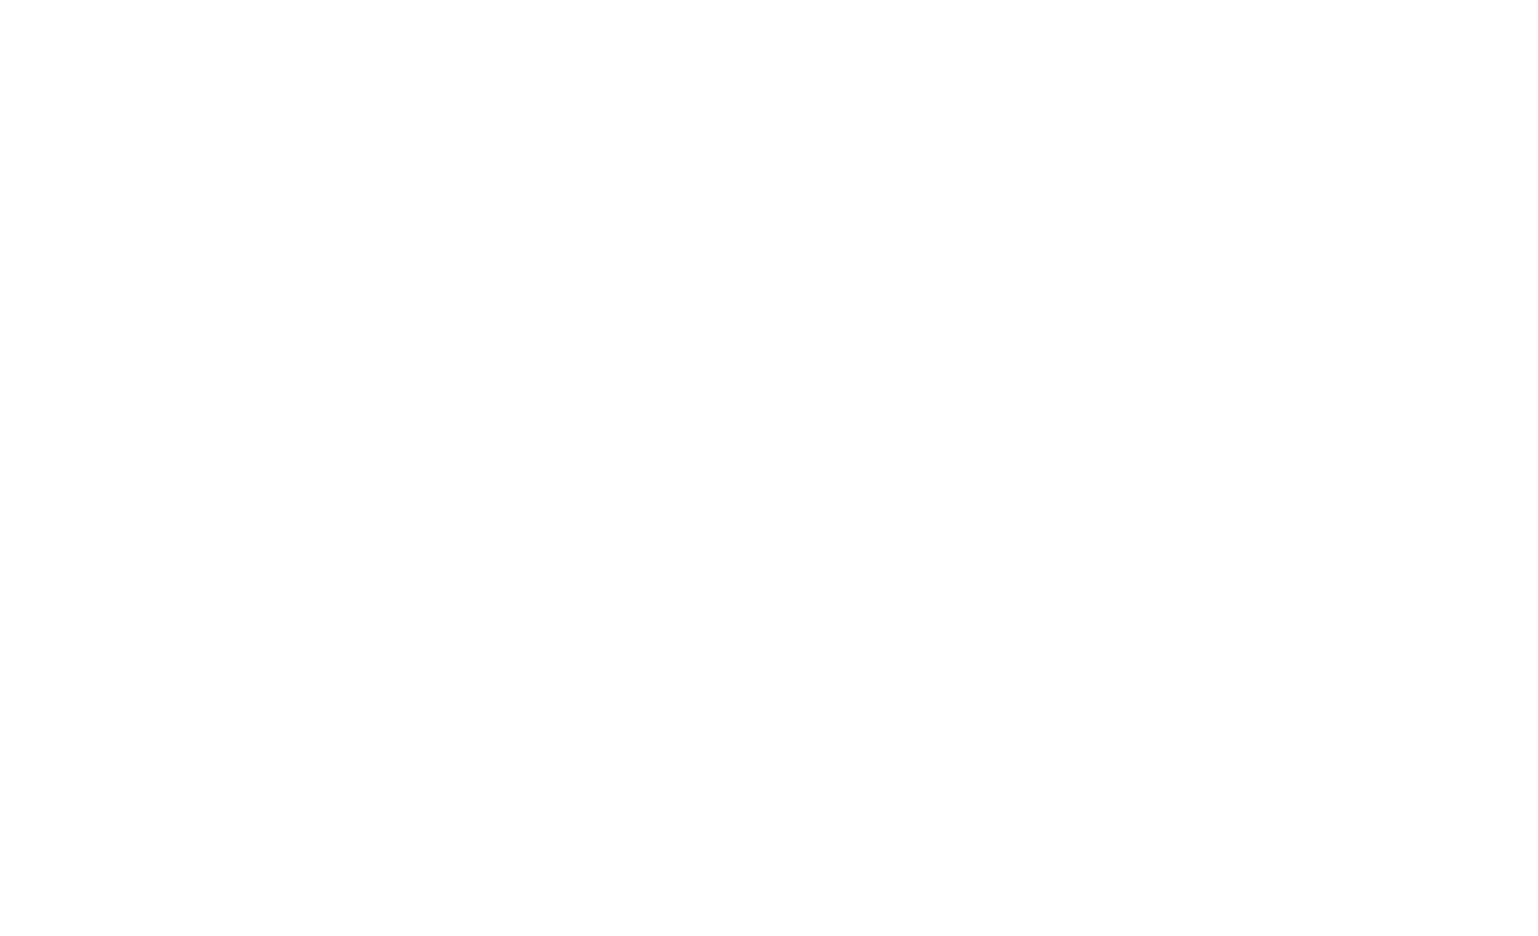 Der doppelte Millionär